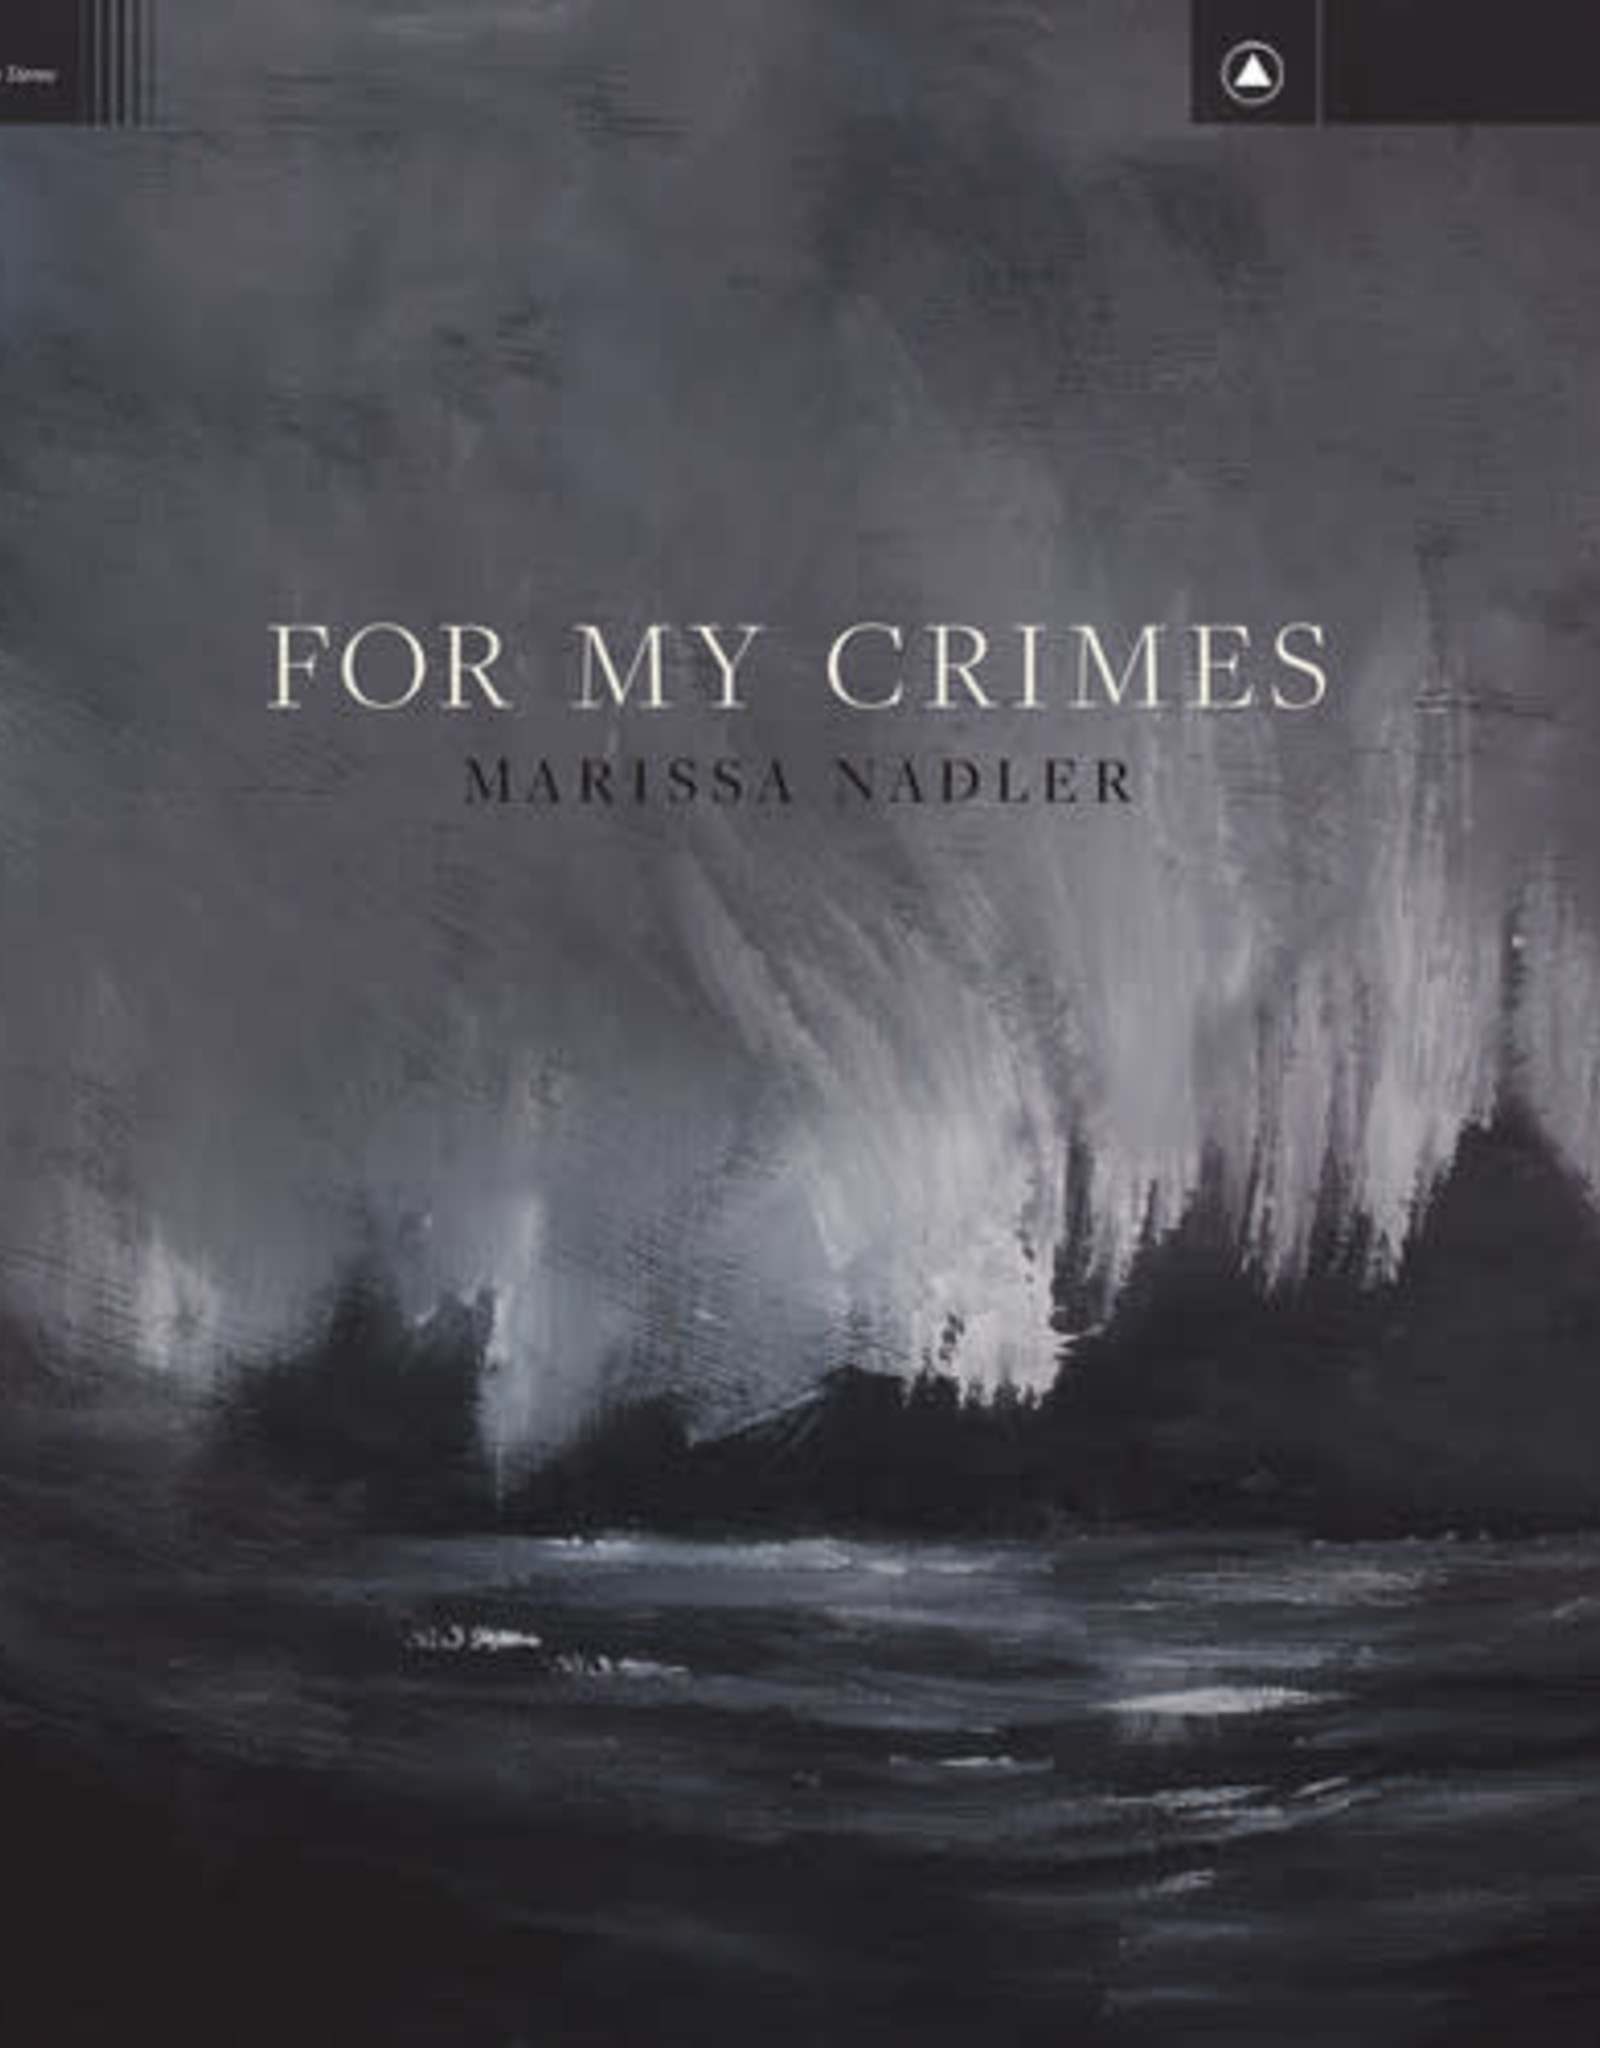 Marissa Nadler - For My Crimes' (Dove & Crow Vinyl )